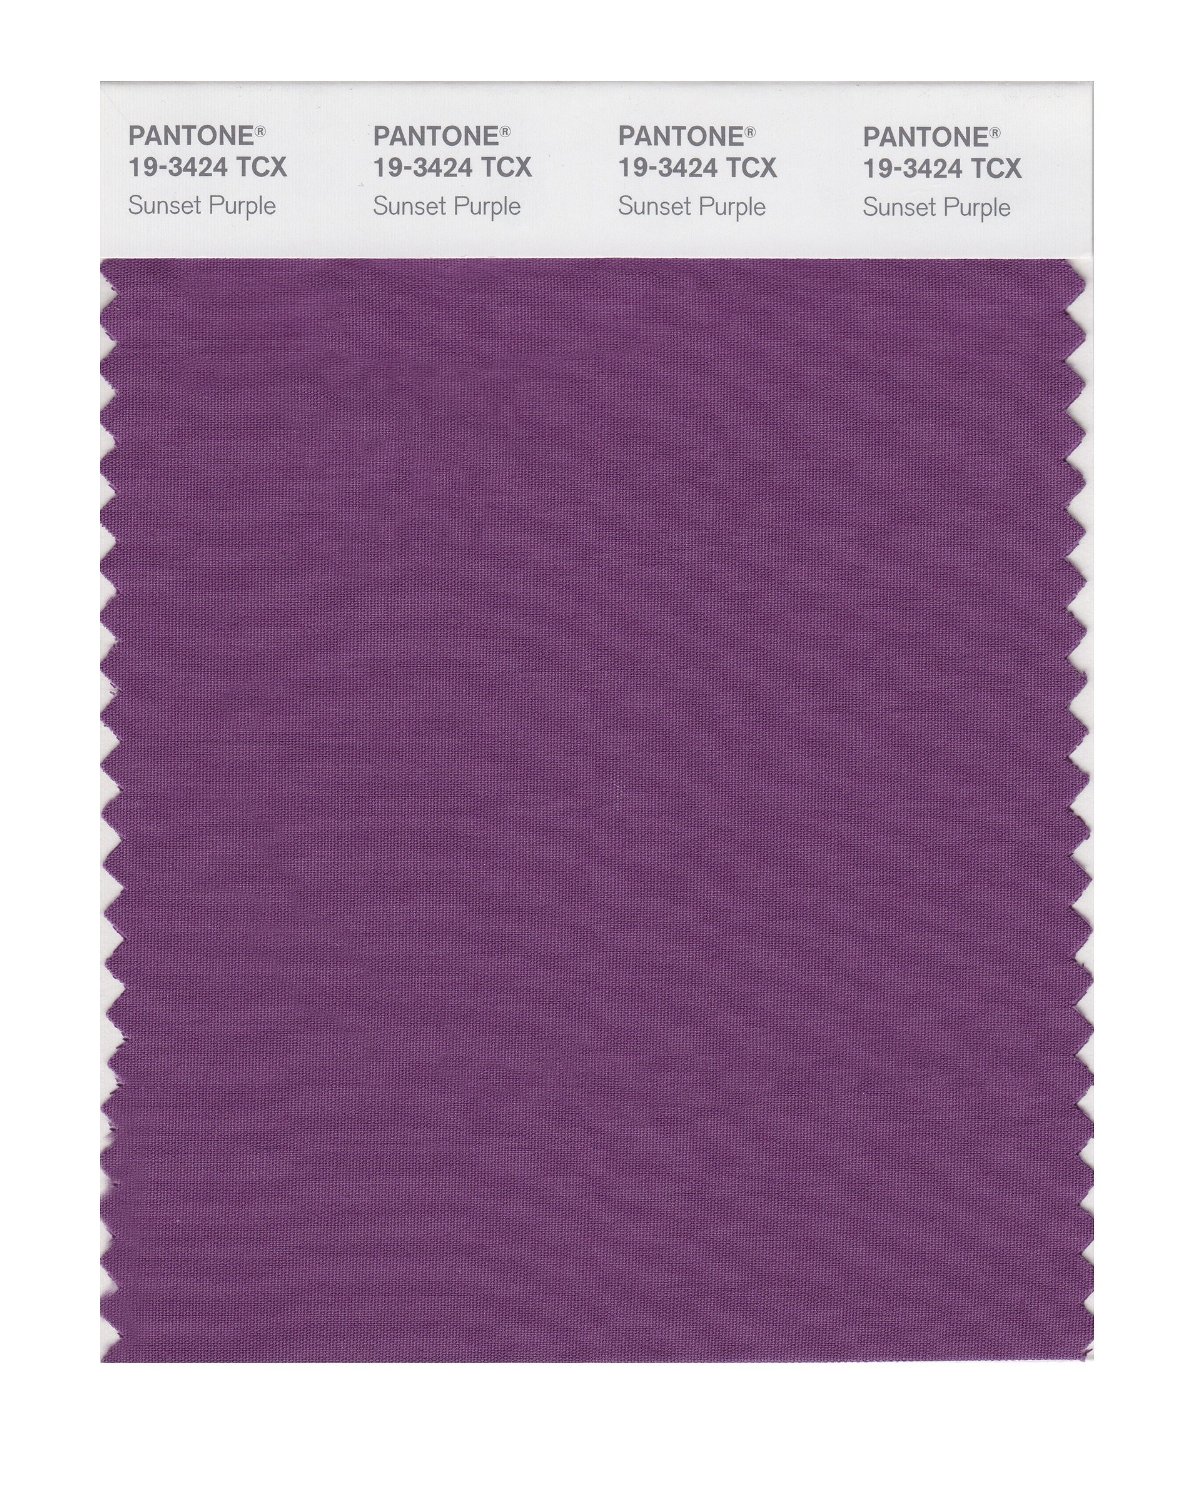 Pantone Cotton Swatch 19-3424 Sunset Purple